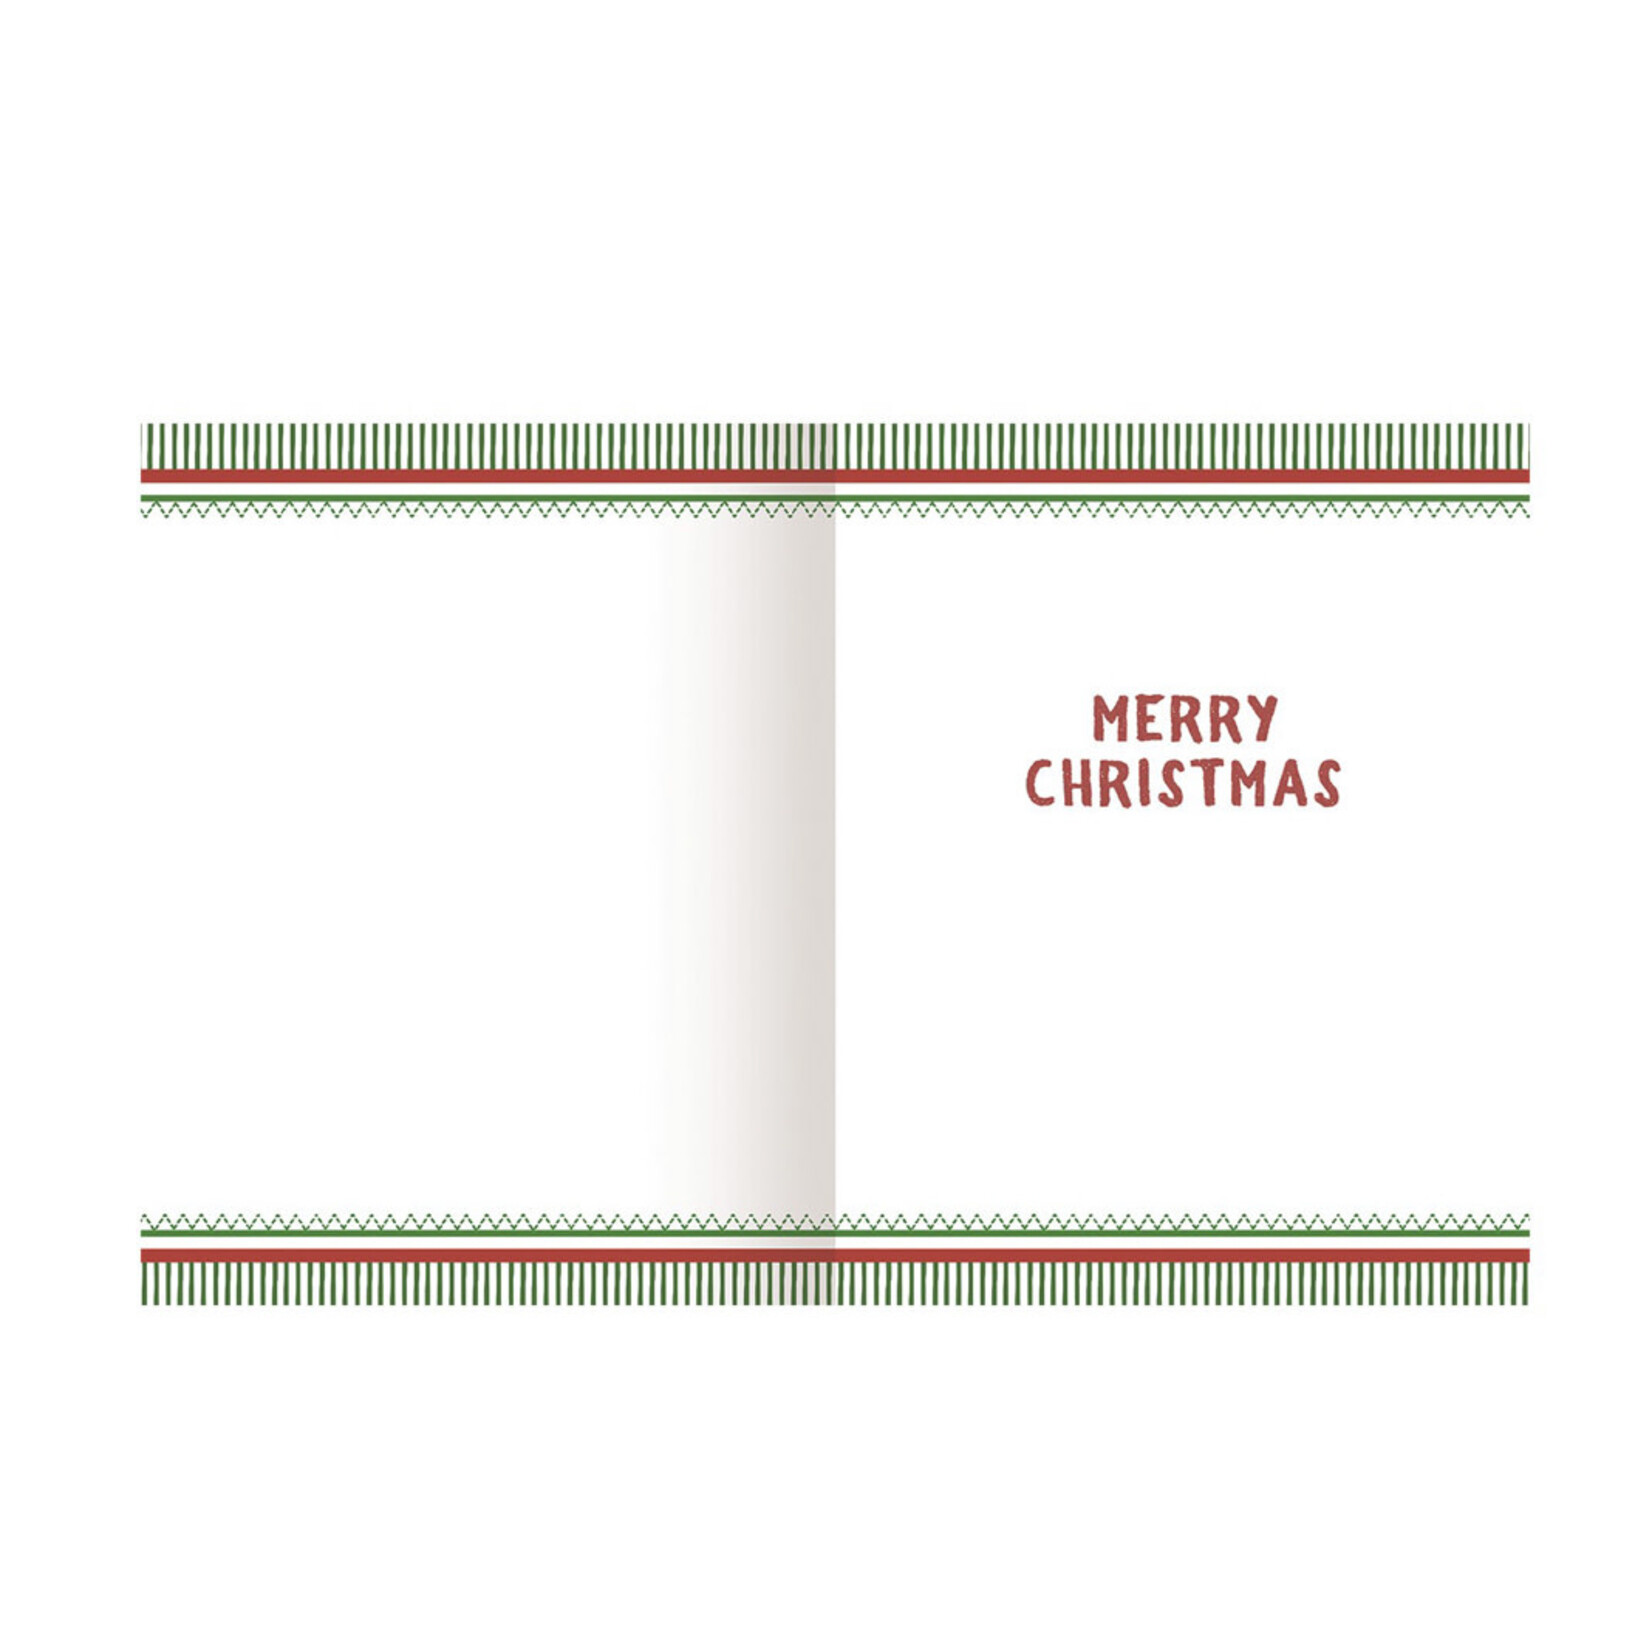 Lang Lang Gnome Christmas Boxed Christmas Cards